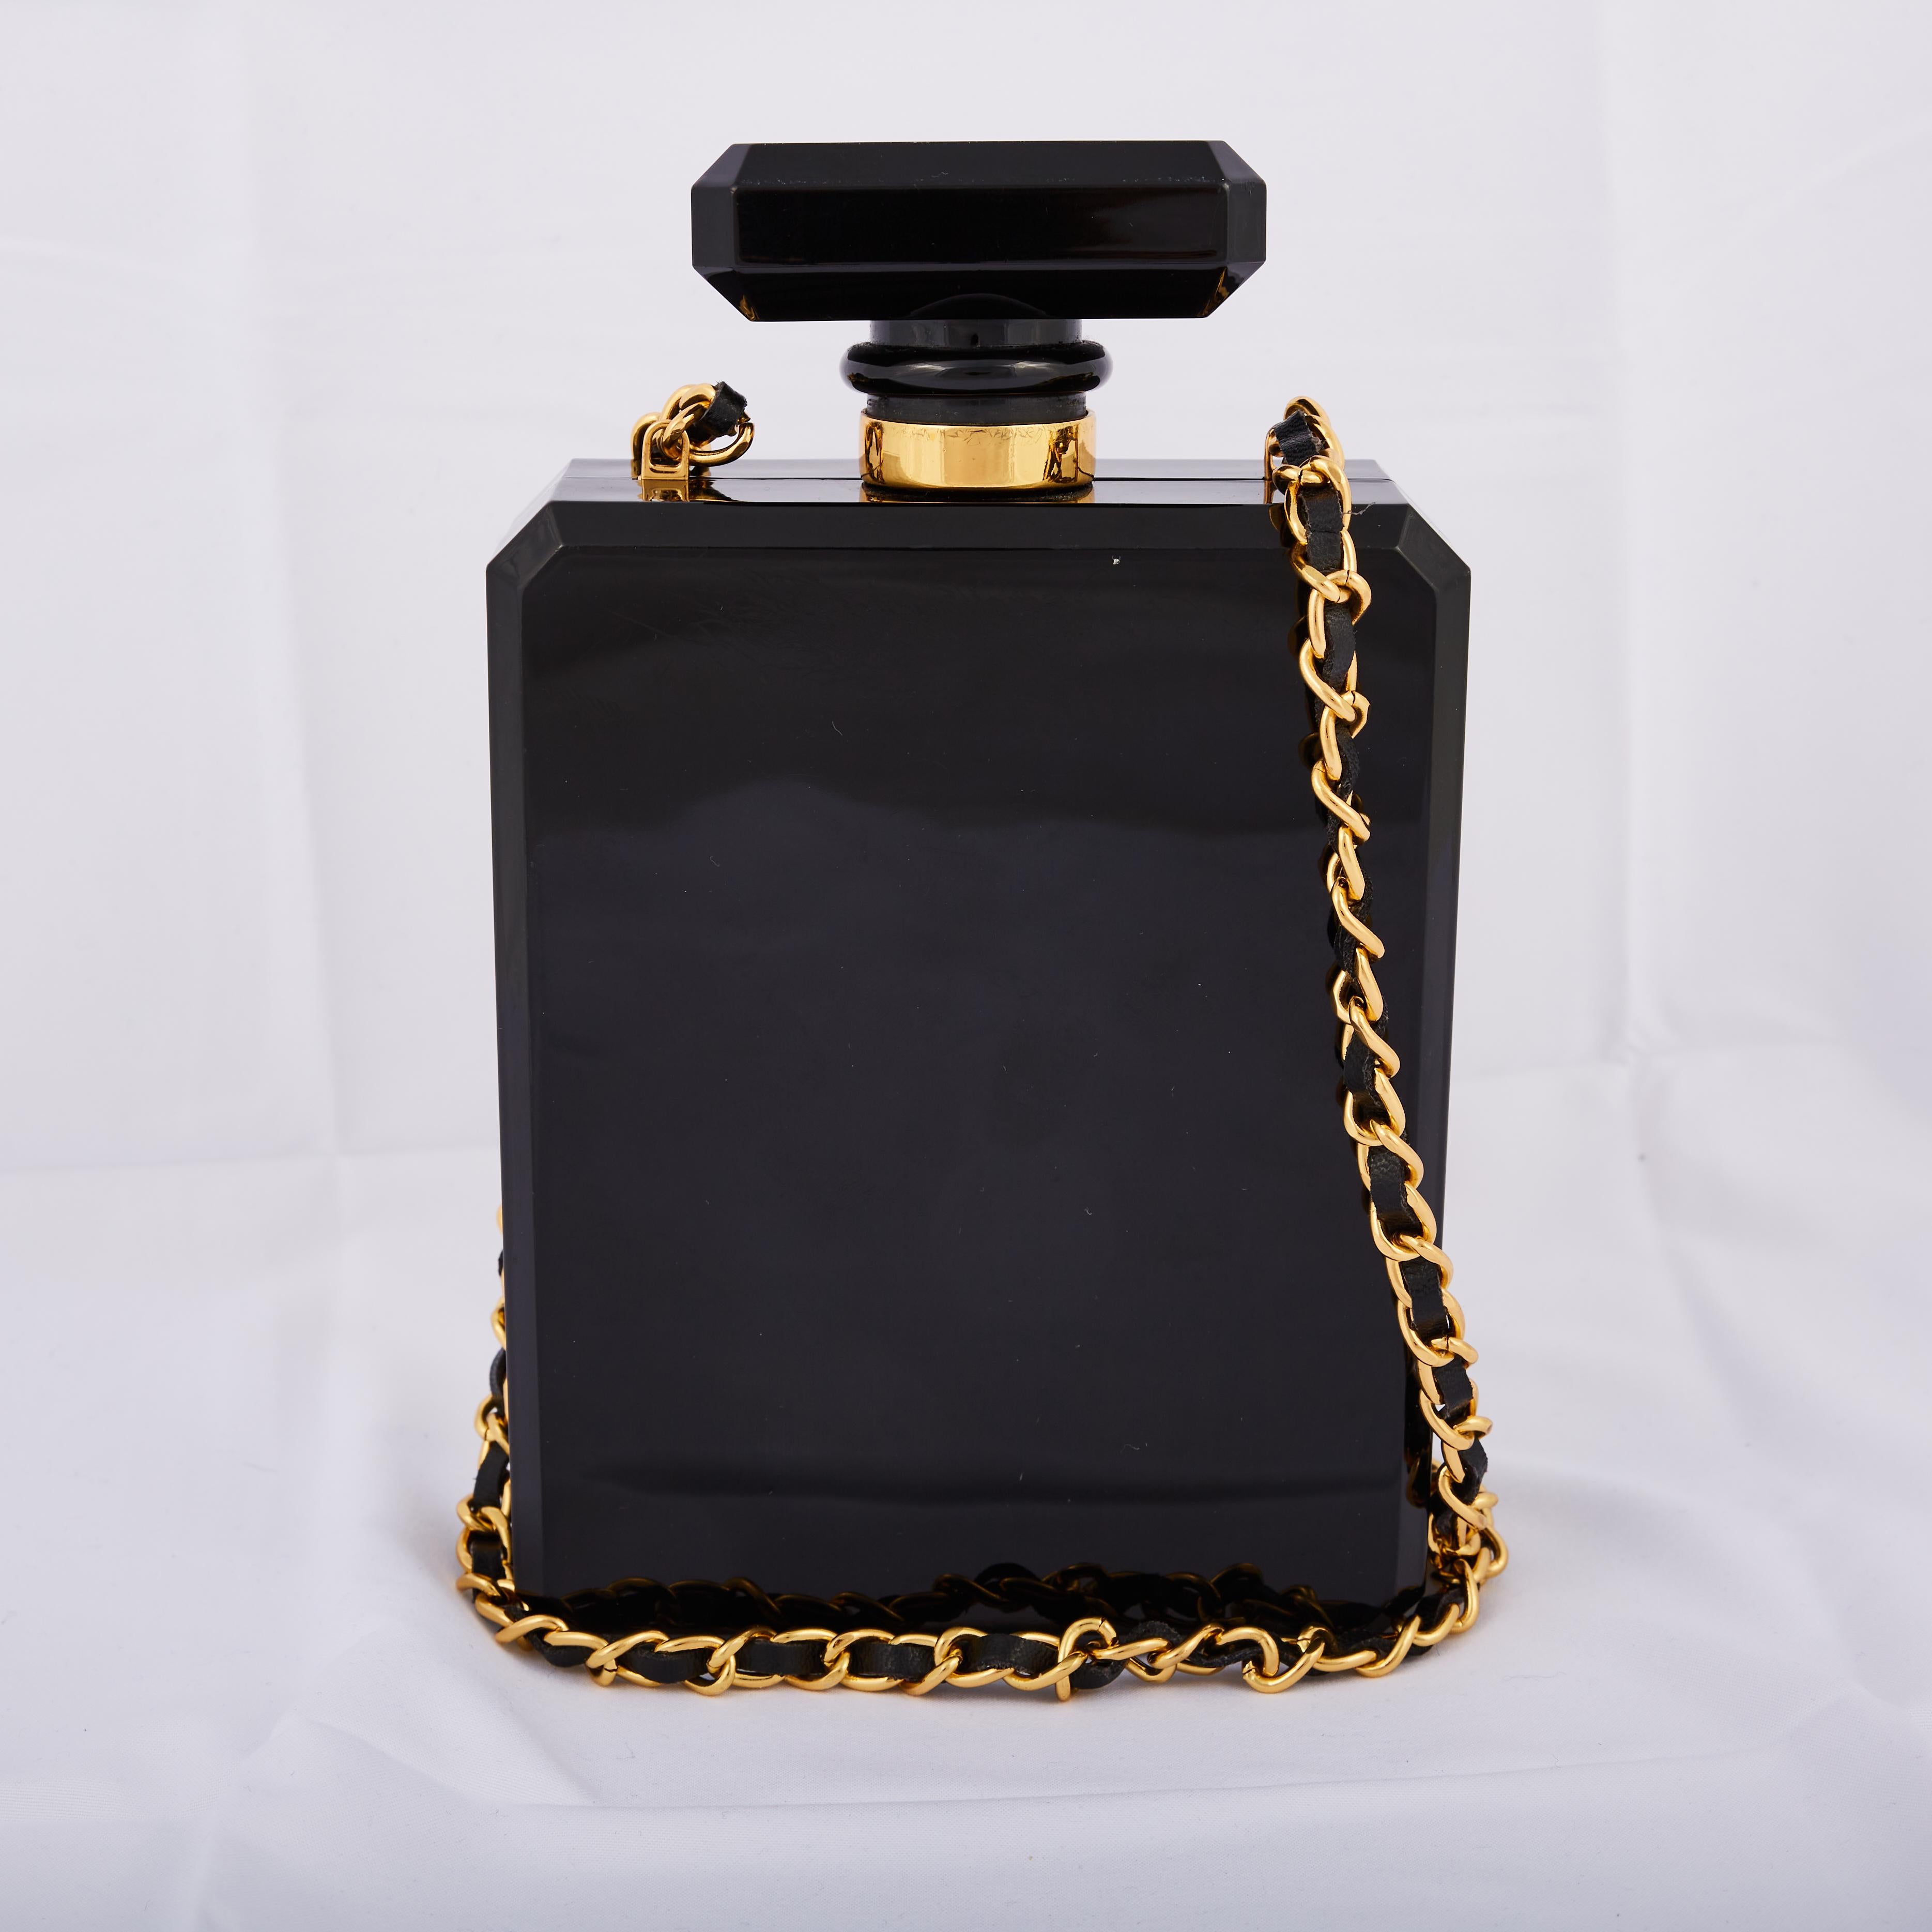 Chanel No5 Perfume Black Limited Edition Evening Shoulder Bag For Sale 2